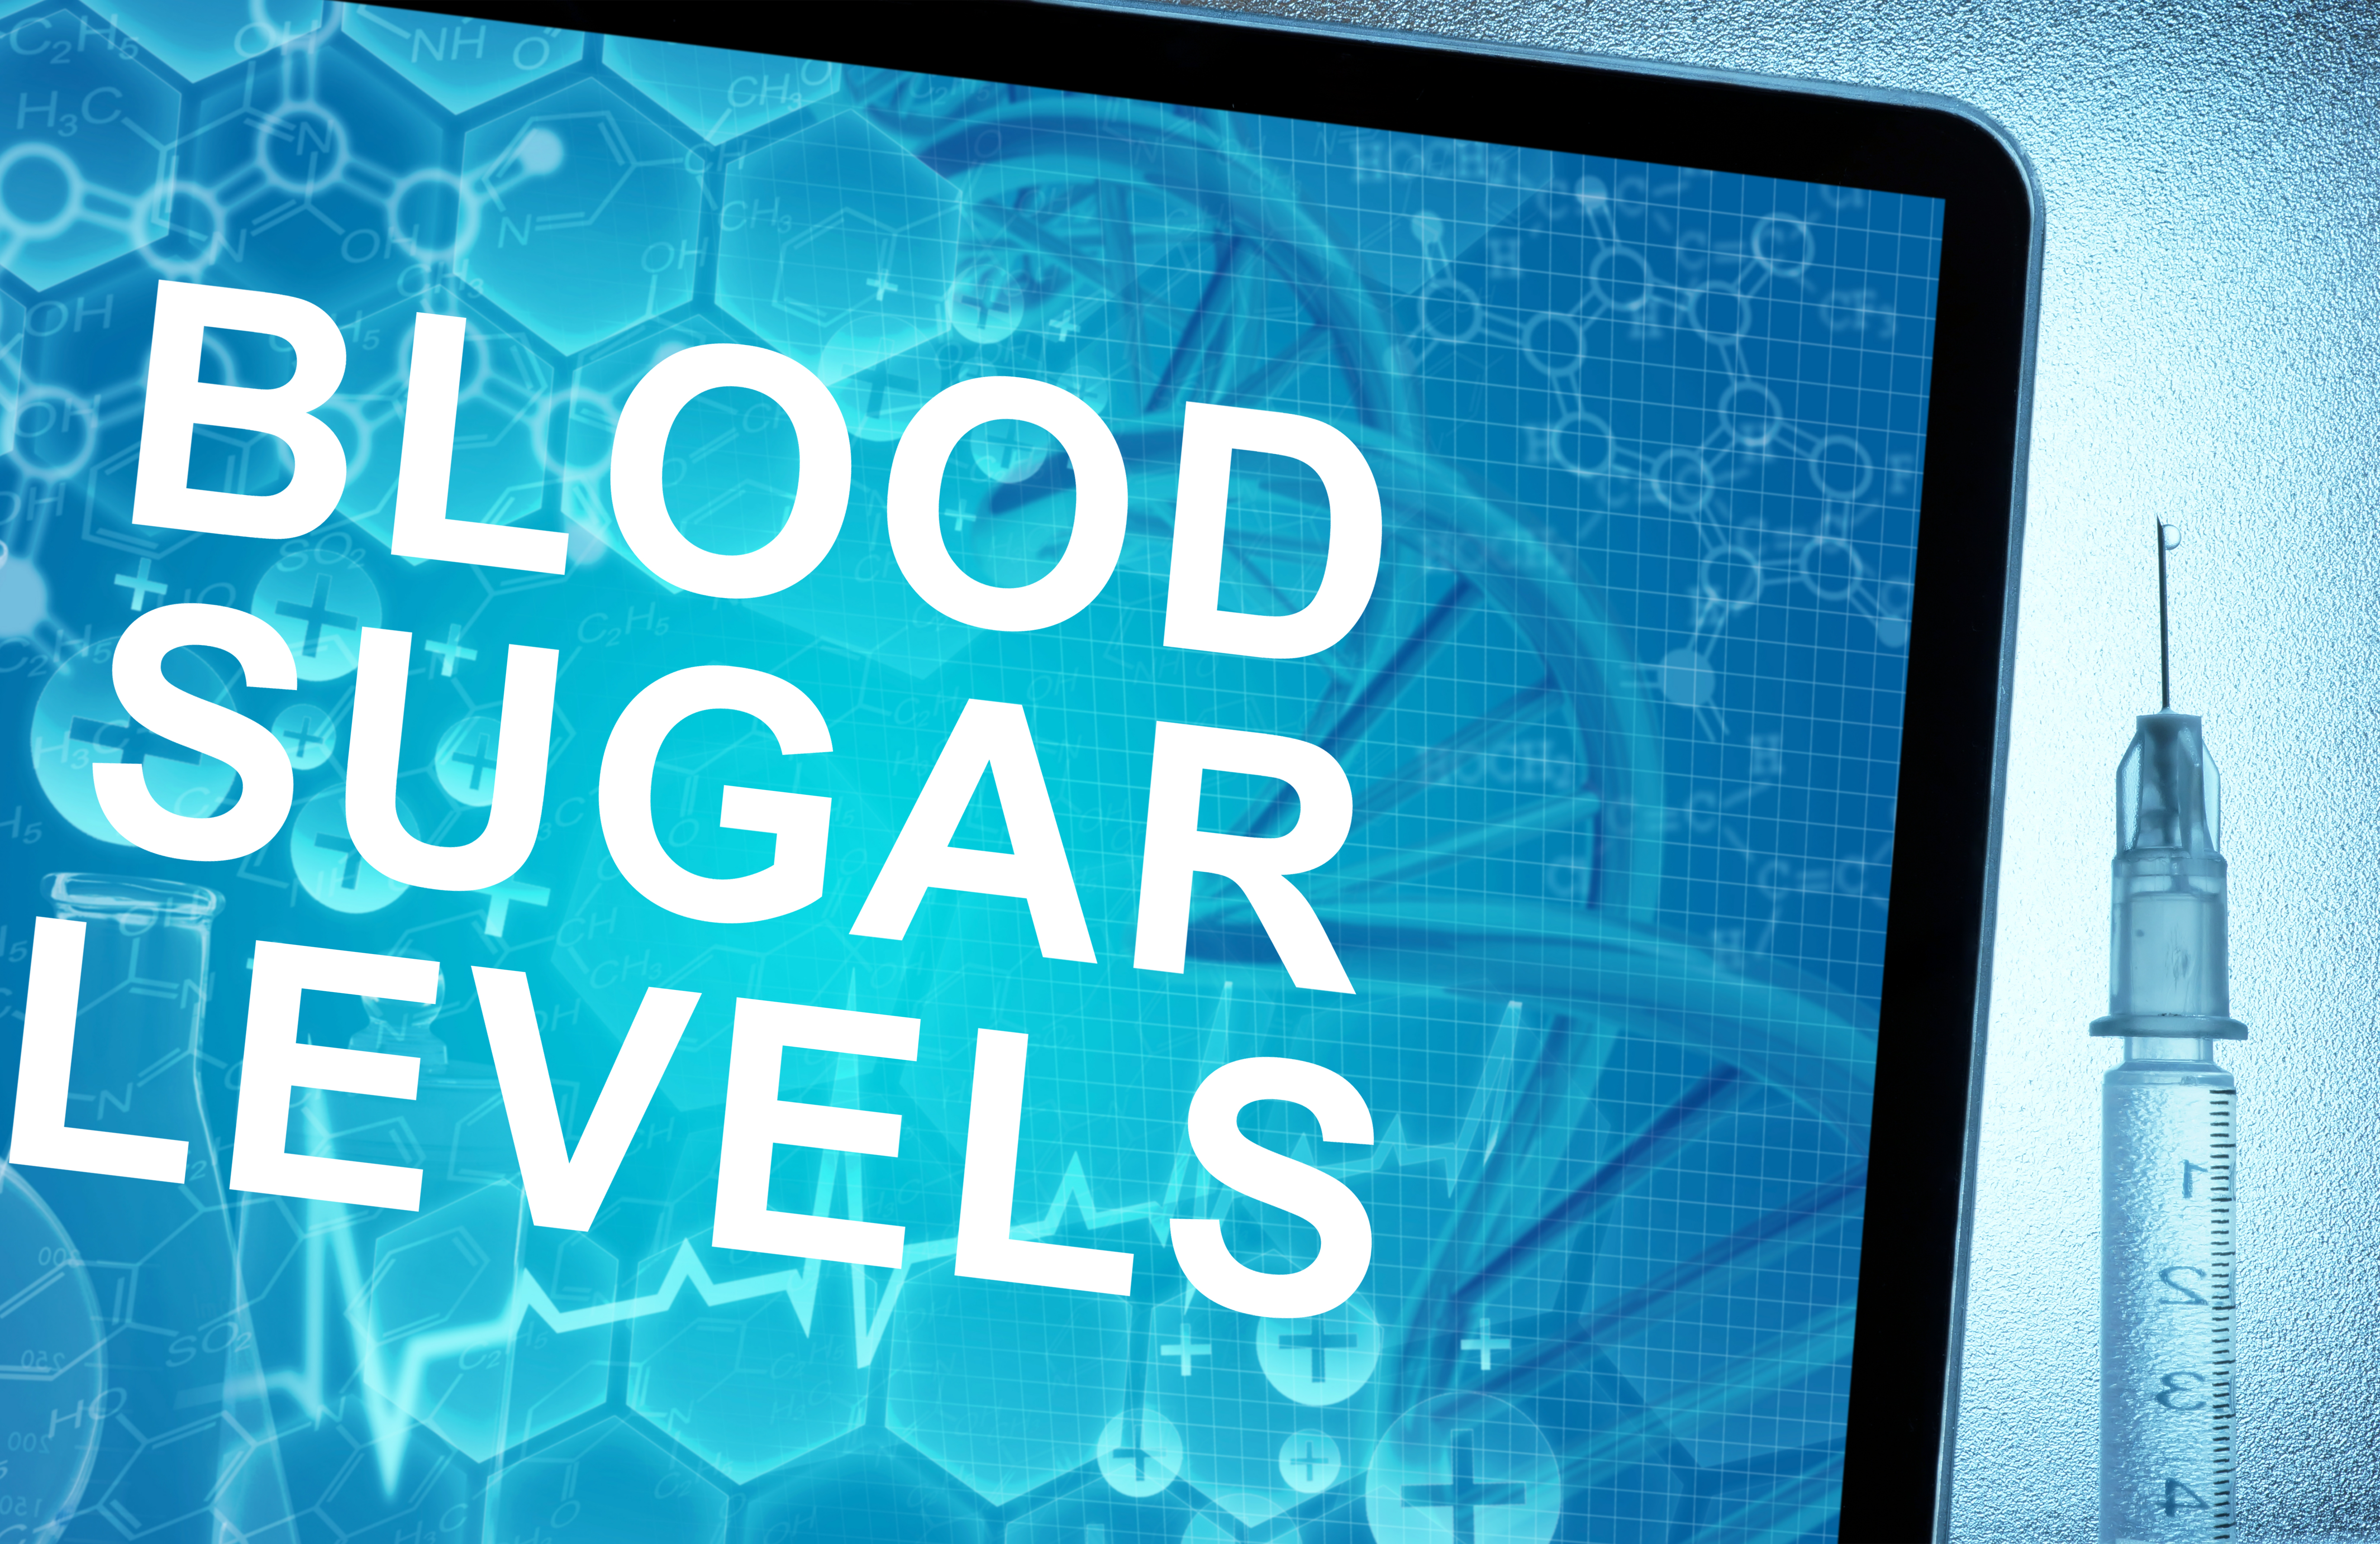 Blood Sugar Levels & Syringe